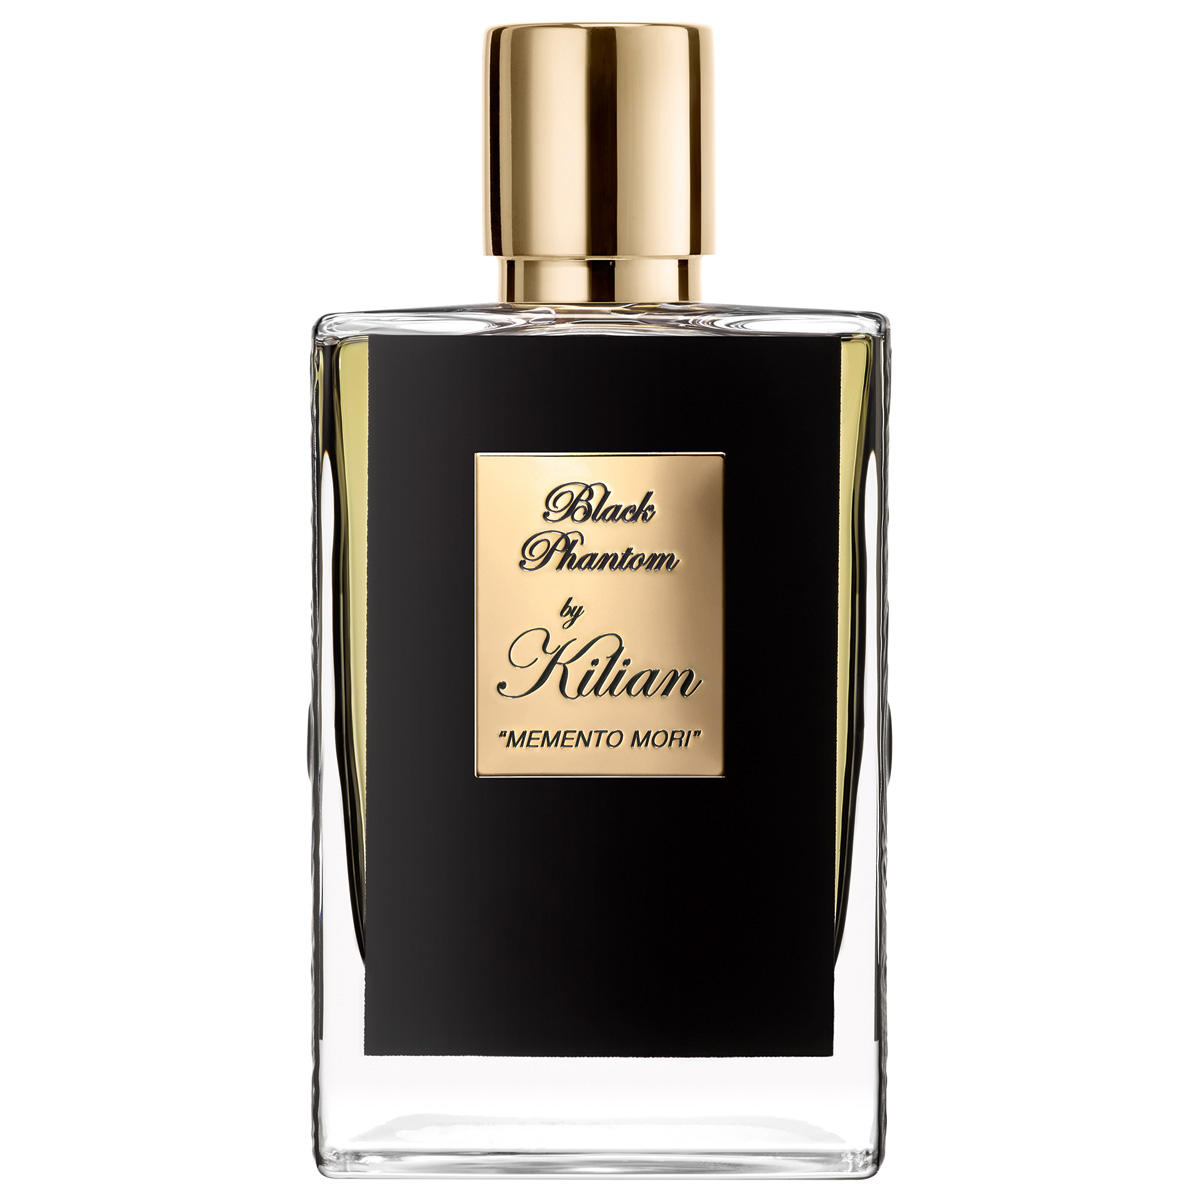 Kilian Paris Fragrance Black Phantom "Memento Mori" Eau de Parfum nachfüllbar 50 ml - 1